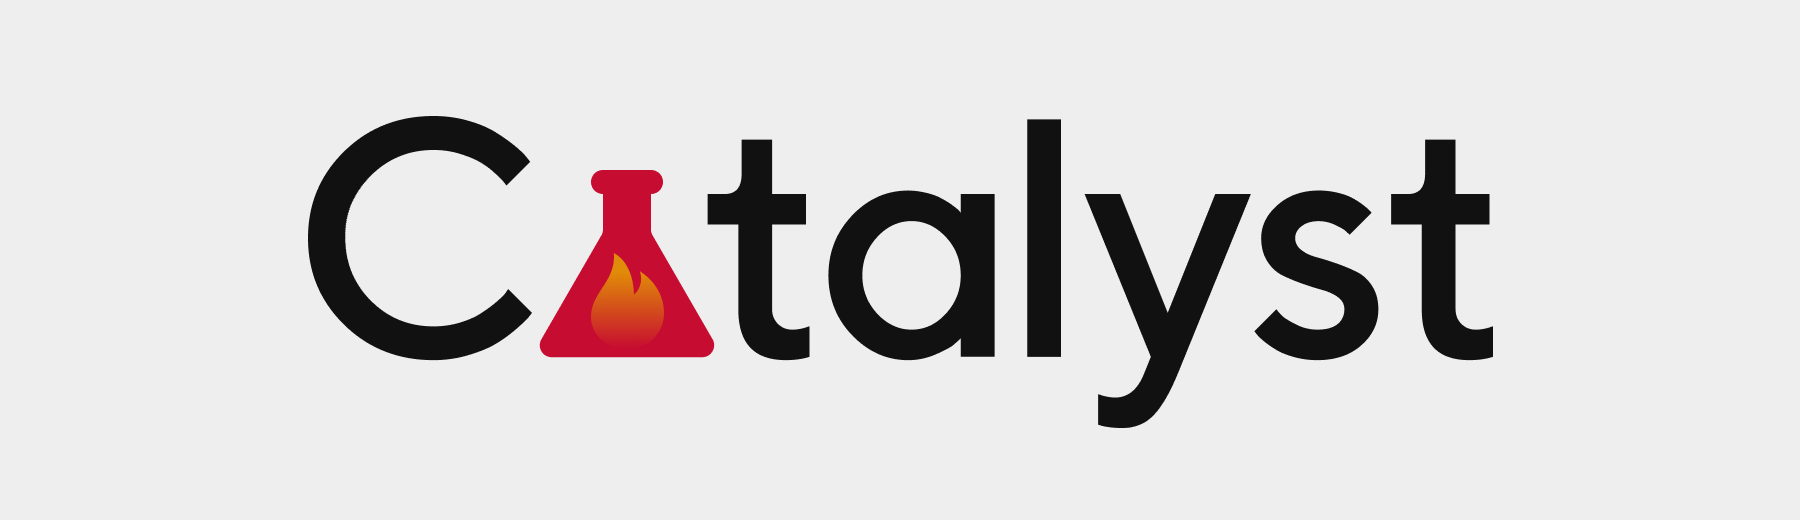 Catalyst Logo - catalyst · PyPI